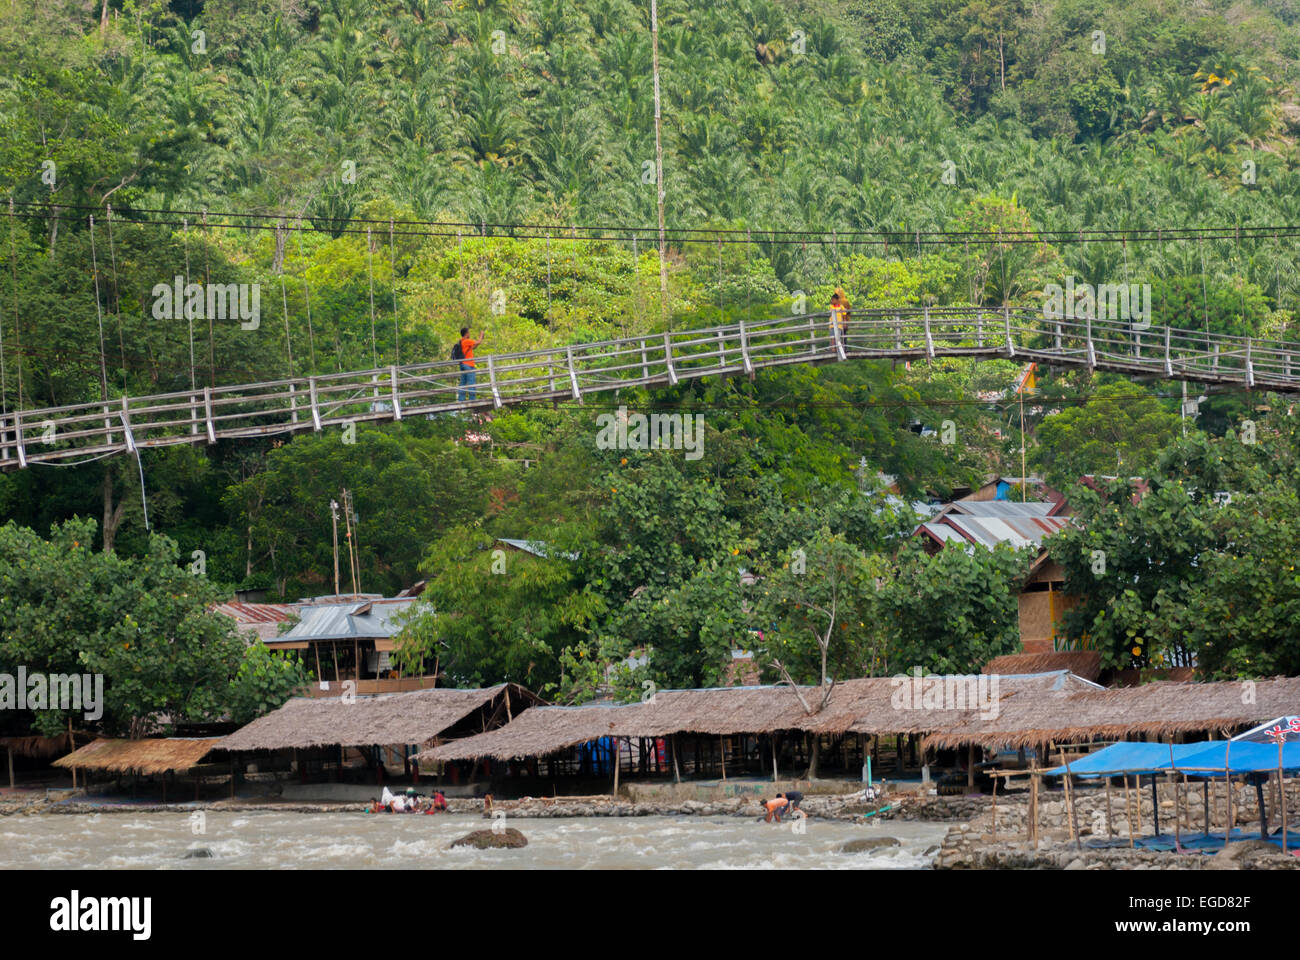 People walking on a hanging bridge, crossing over Bahorok river in Bukit Lawang, Bahorok, Langkat, North Sumatra, Indonesia. Stock Photo